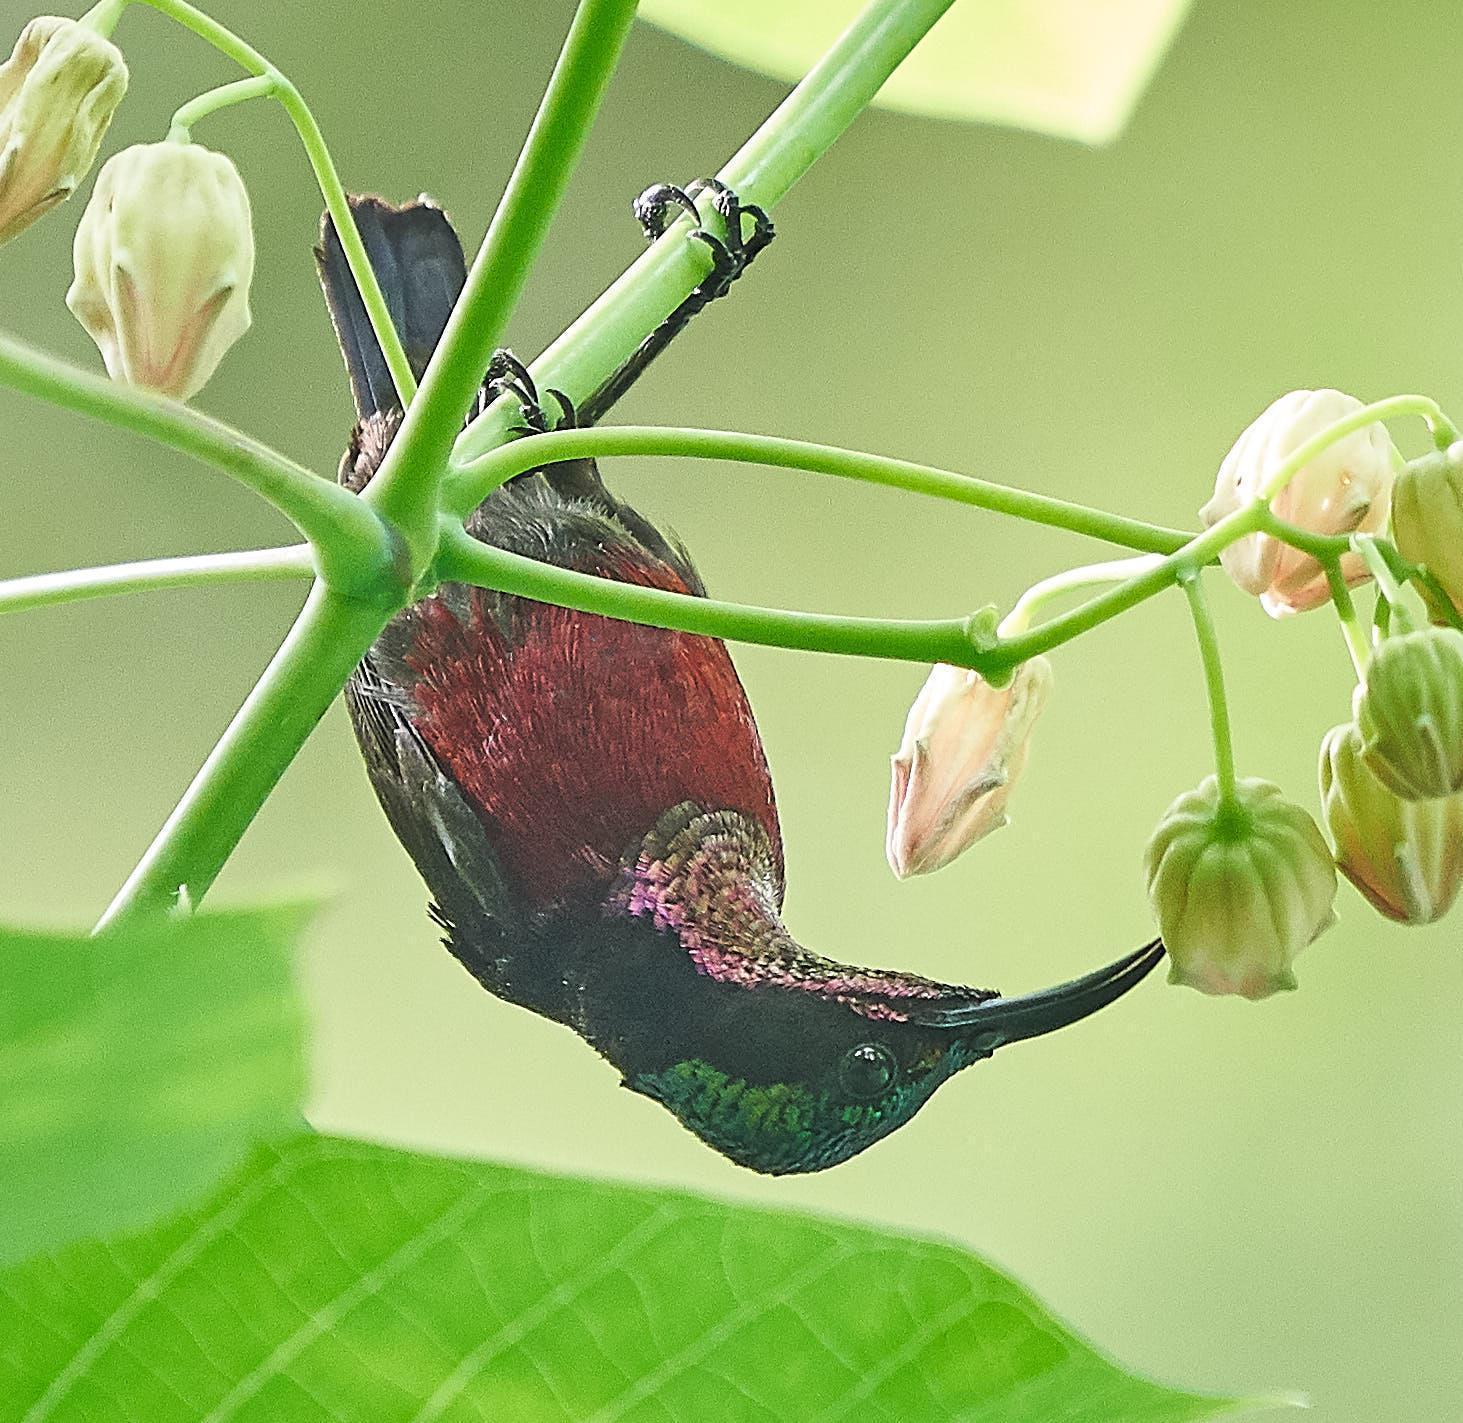 Van Hasselt's Sunbird Photo by Steven Cheong